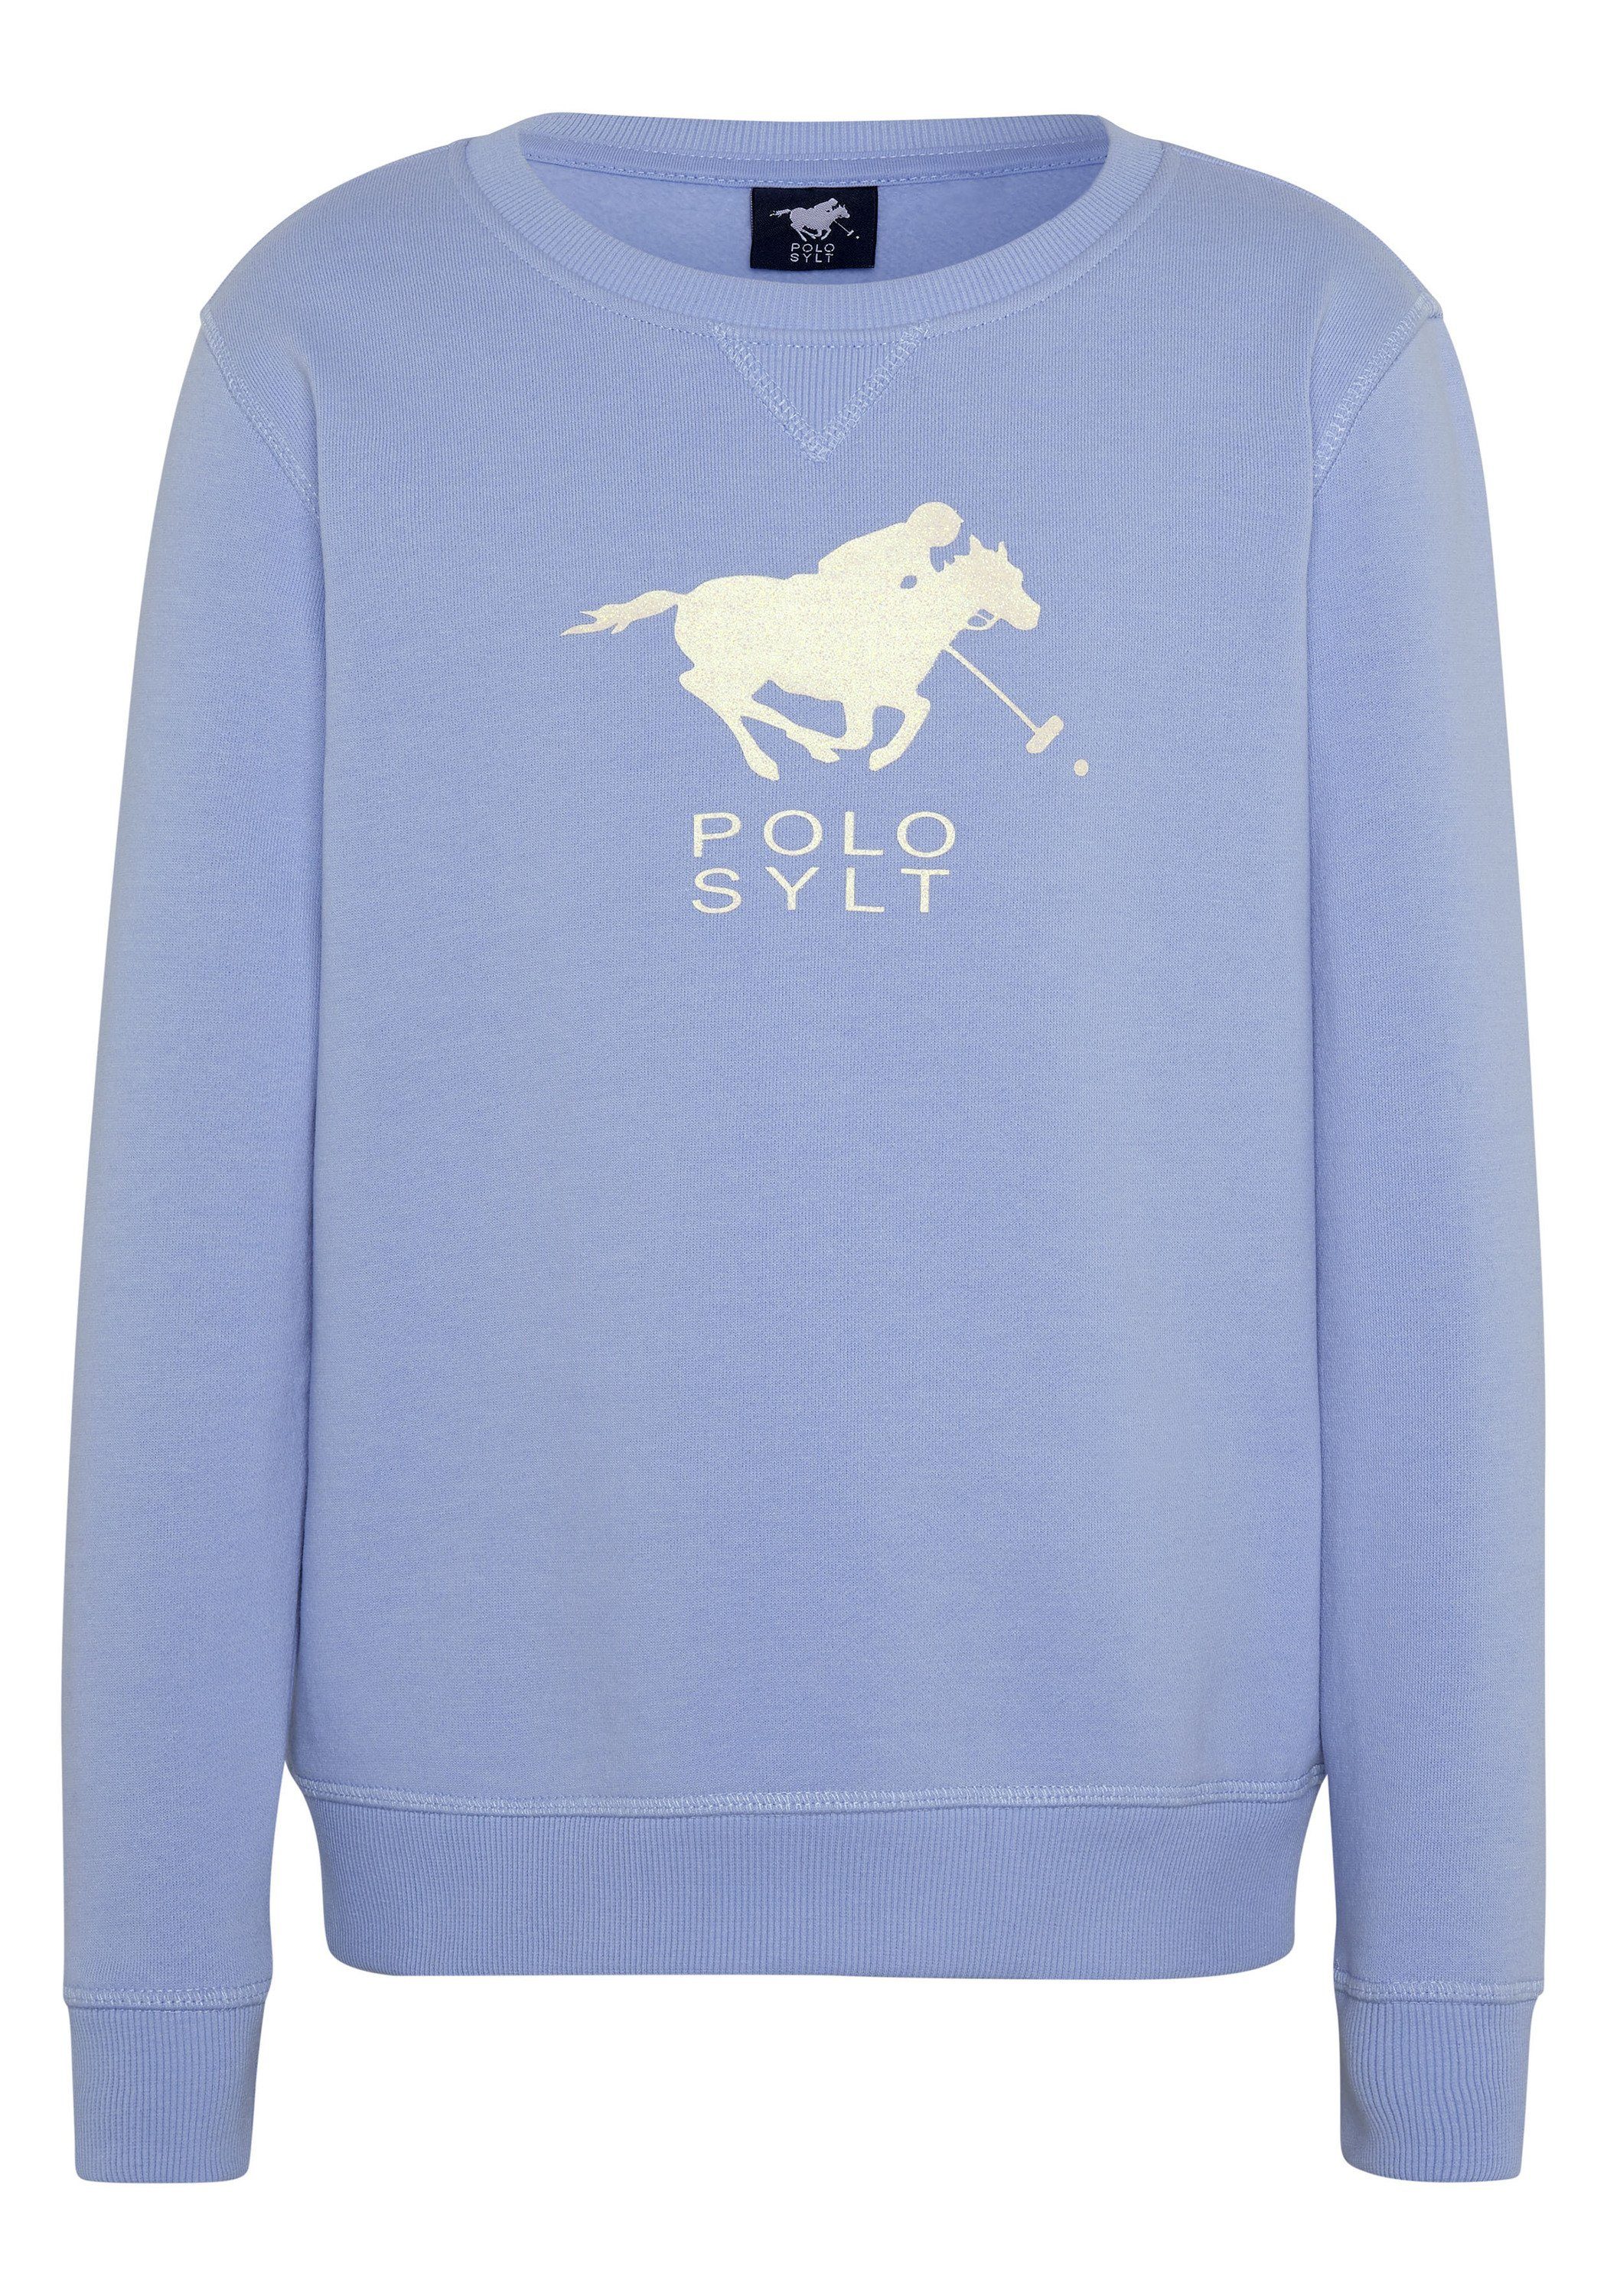 Polo Sylt Sweatshirt mit Brunnera Glitzer-Label-Print Blue